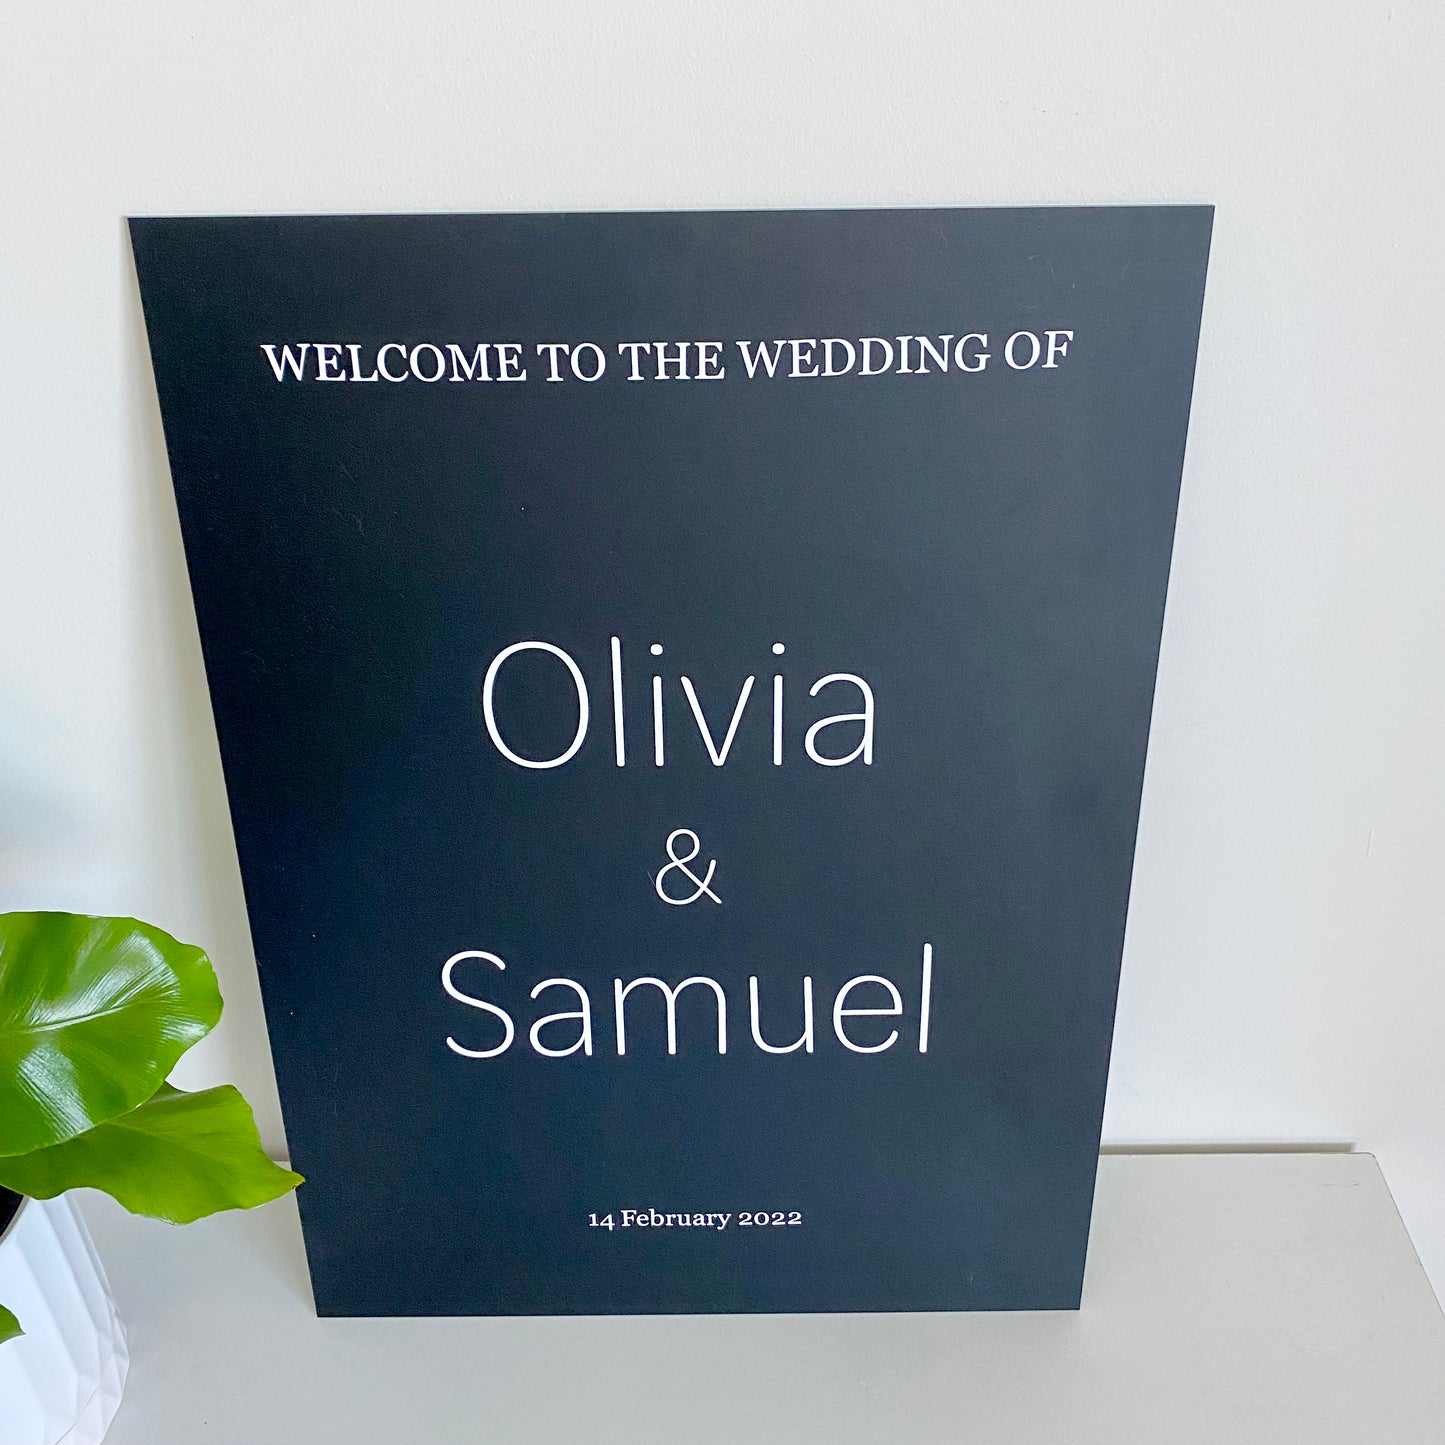 The Olivia wedding sign